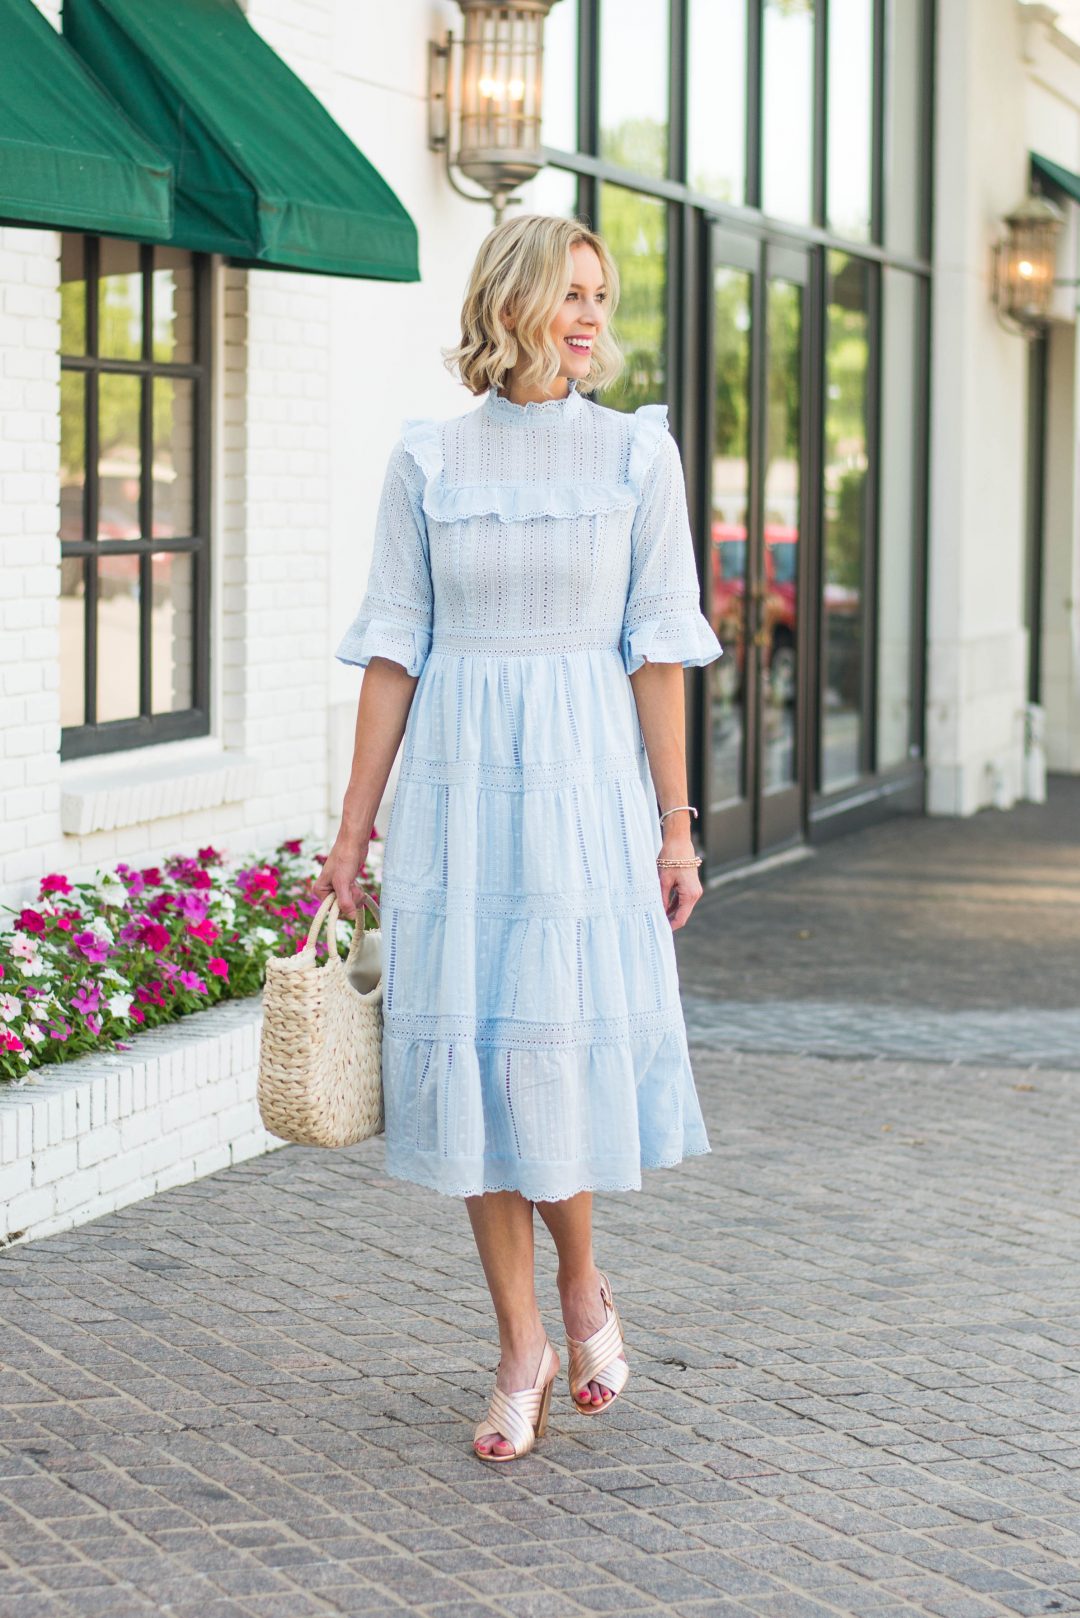 Dreamy Summer Blue Crochet Dress - New Favorite! - Straight A Style